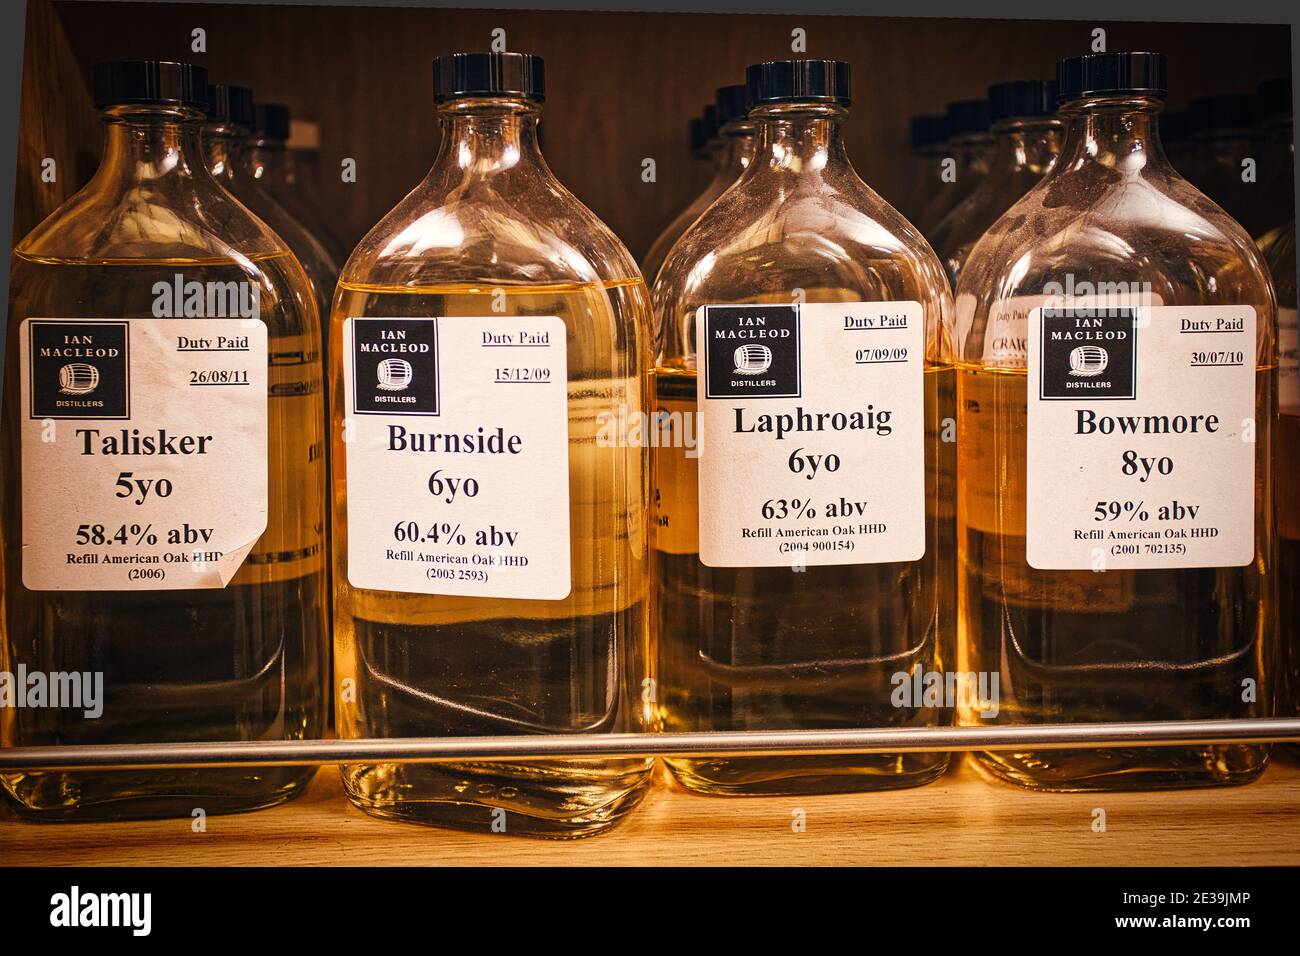 Ian Macleod Blending and Bottling Center, Schottland Stockfoto